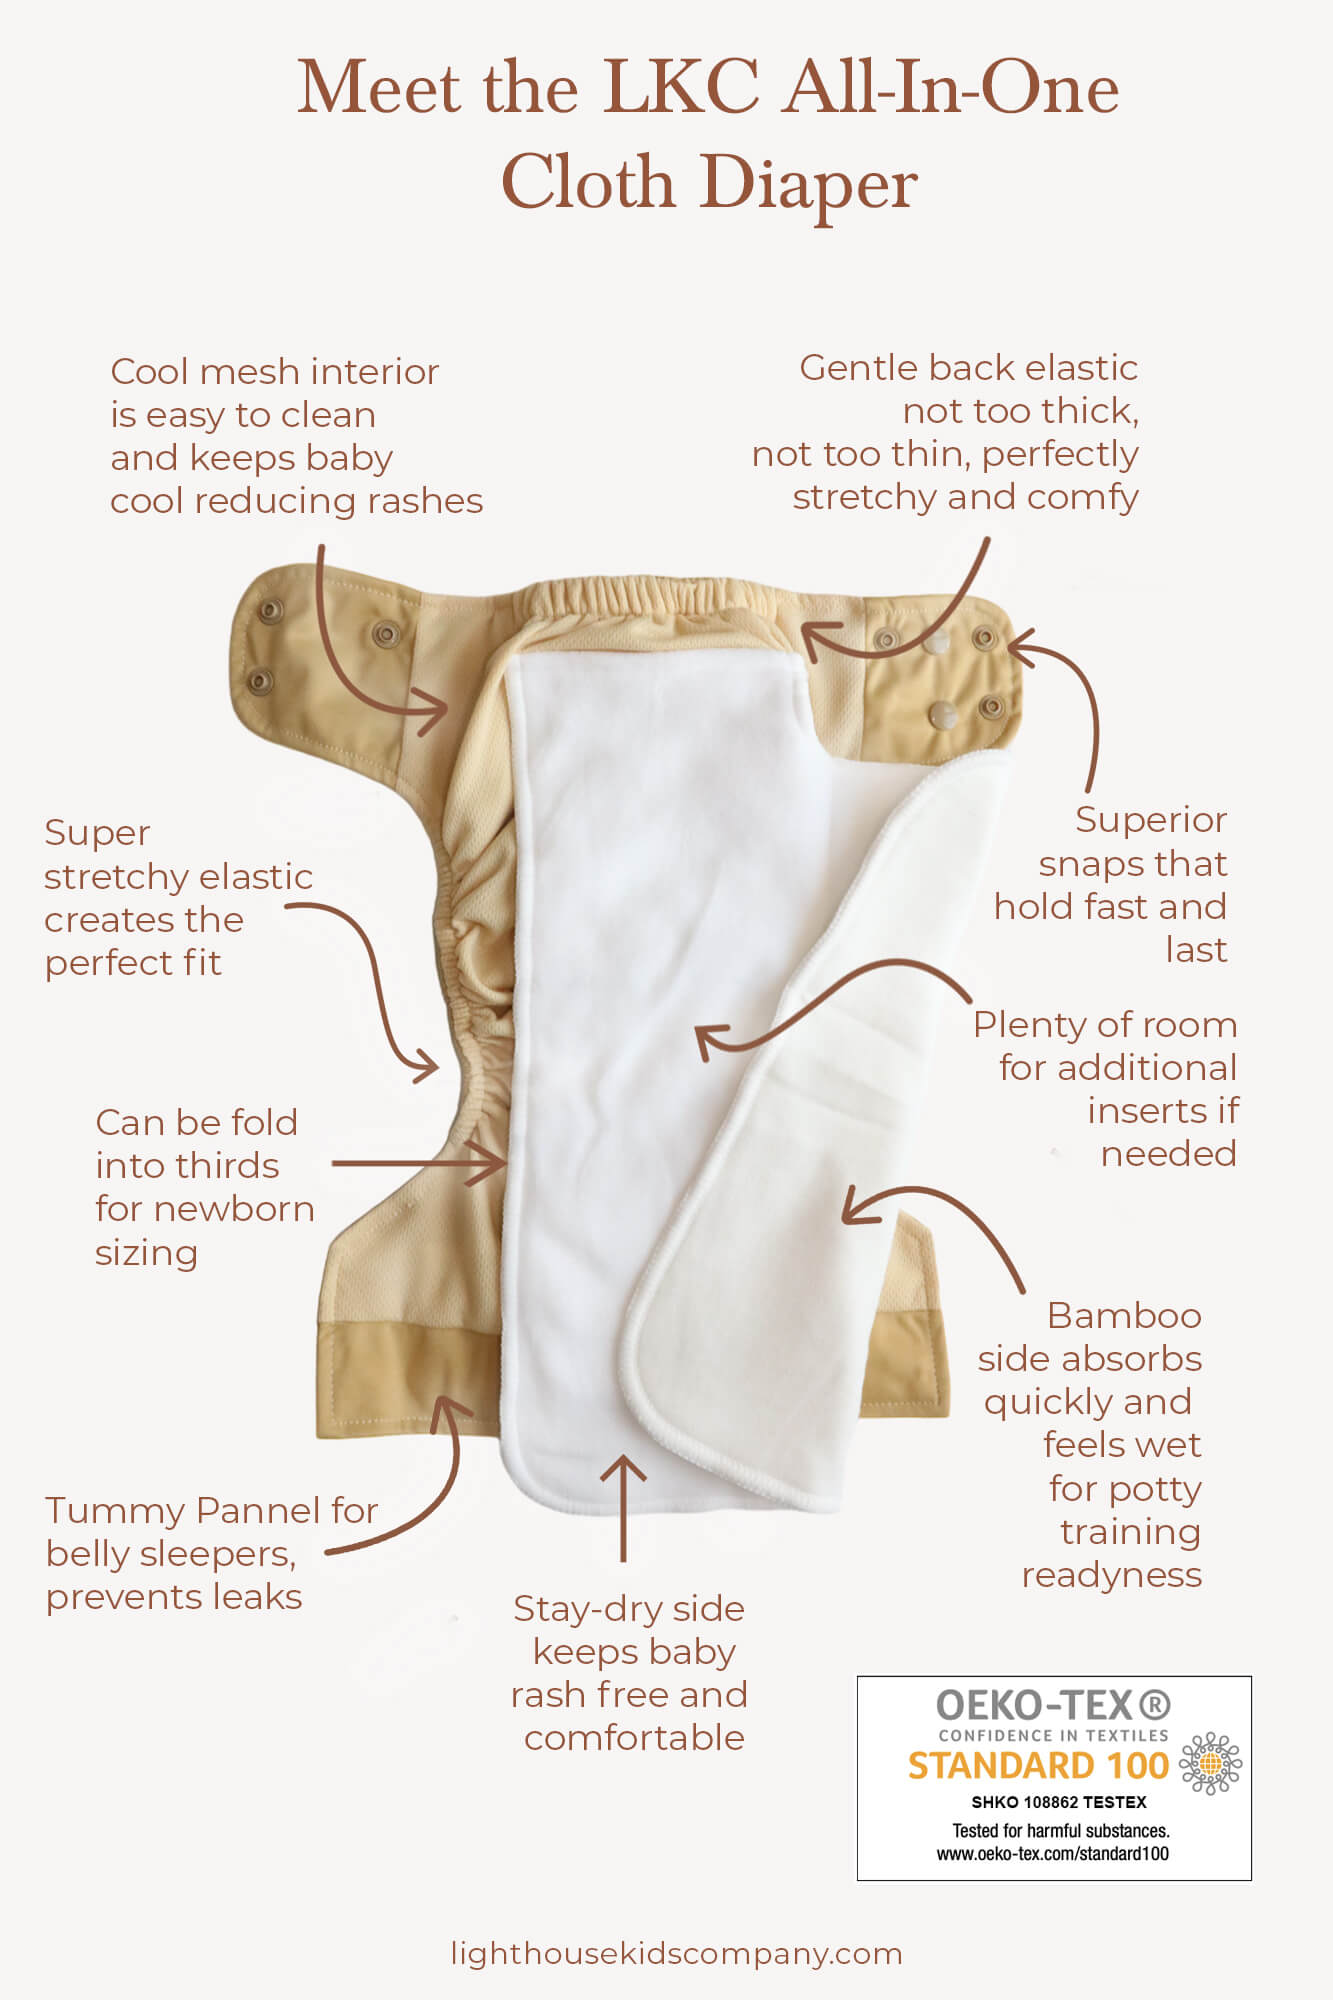 Best All-In-One Cloth Diaper 